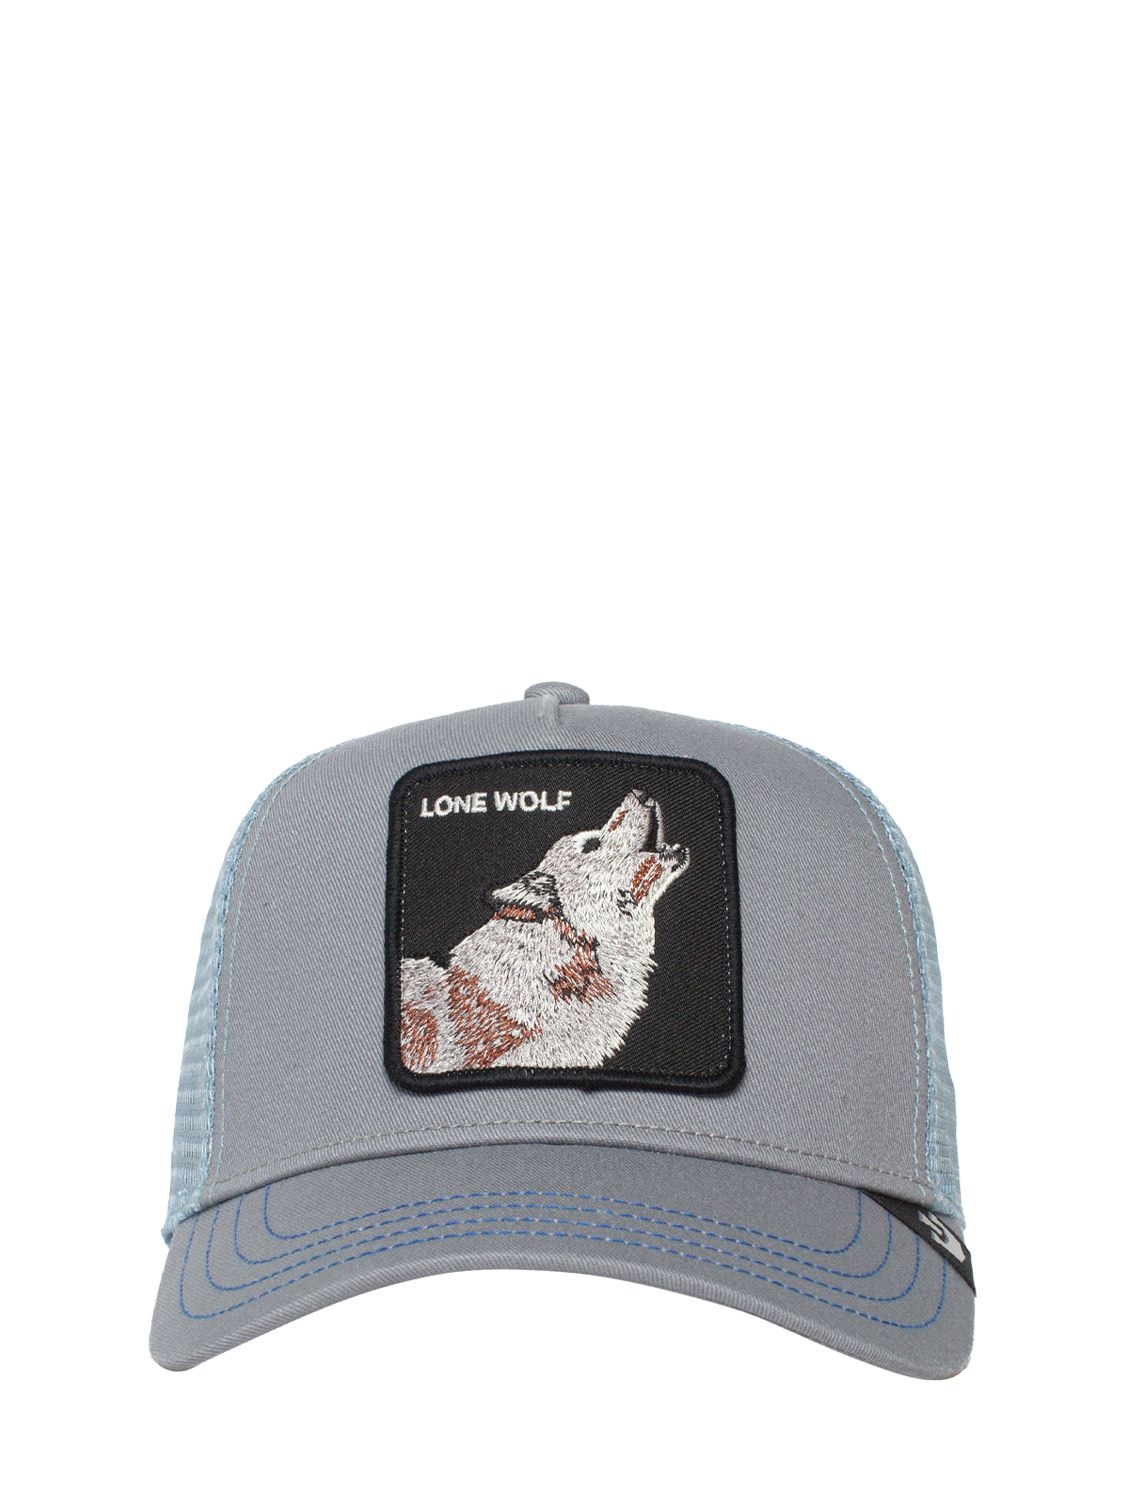 Goorin Bros The Lone Wolf Trucker Hat W/patch In Grey,multi